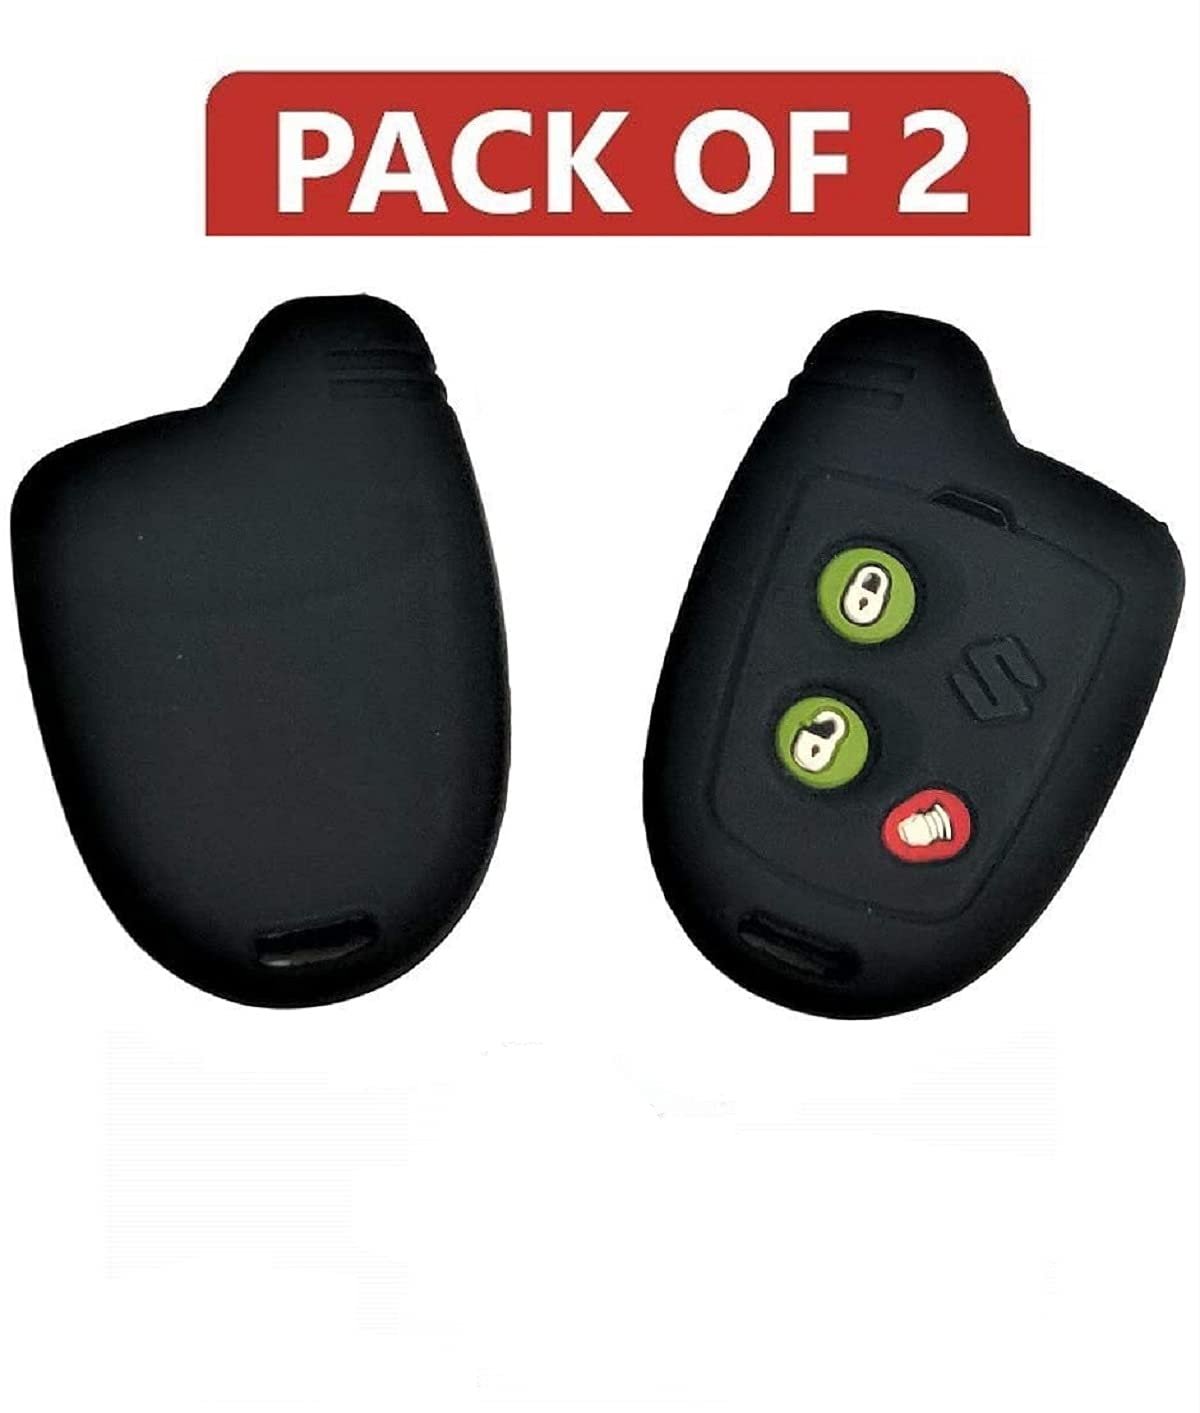 Silicone Key Cover Compatible With Maruti Suzuki Nippon Remote (Black, Pack of 2) Image 